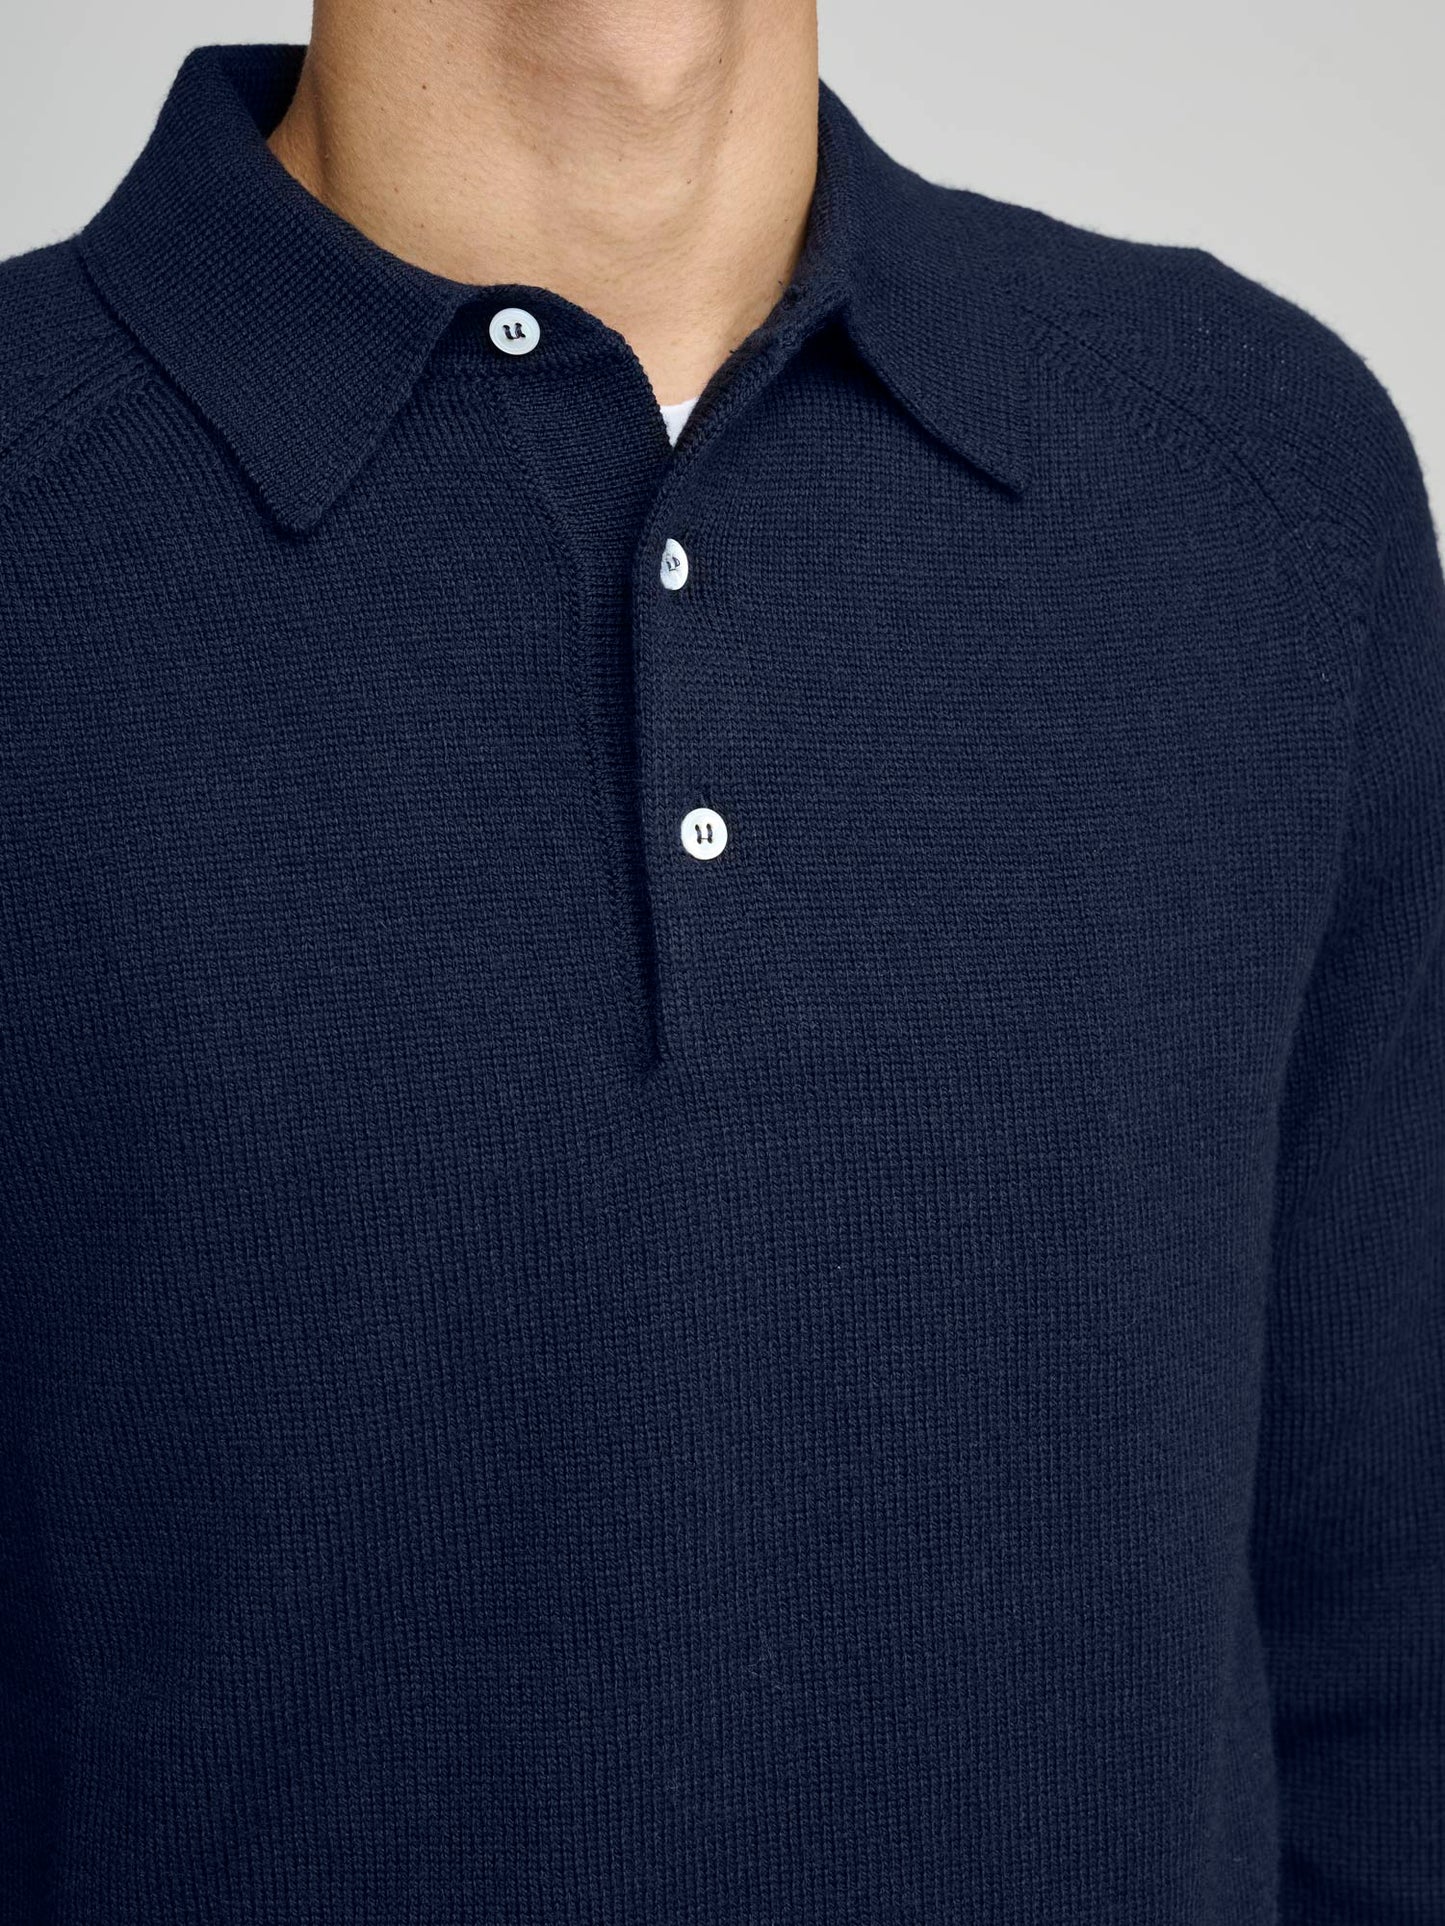 Long Sleeve Merino Wool Knitted Polo, Navy